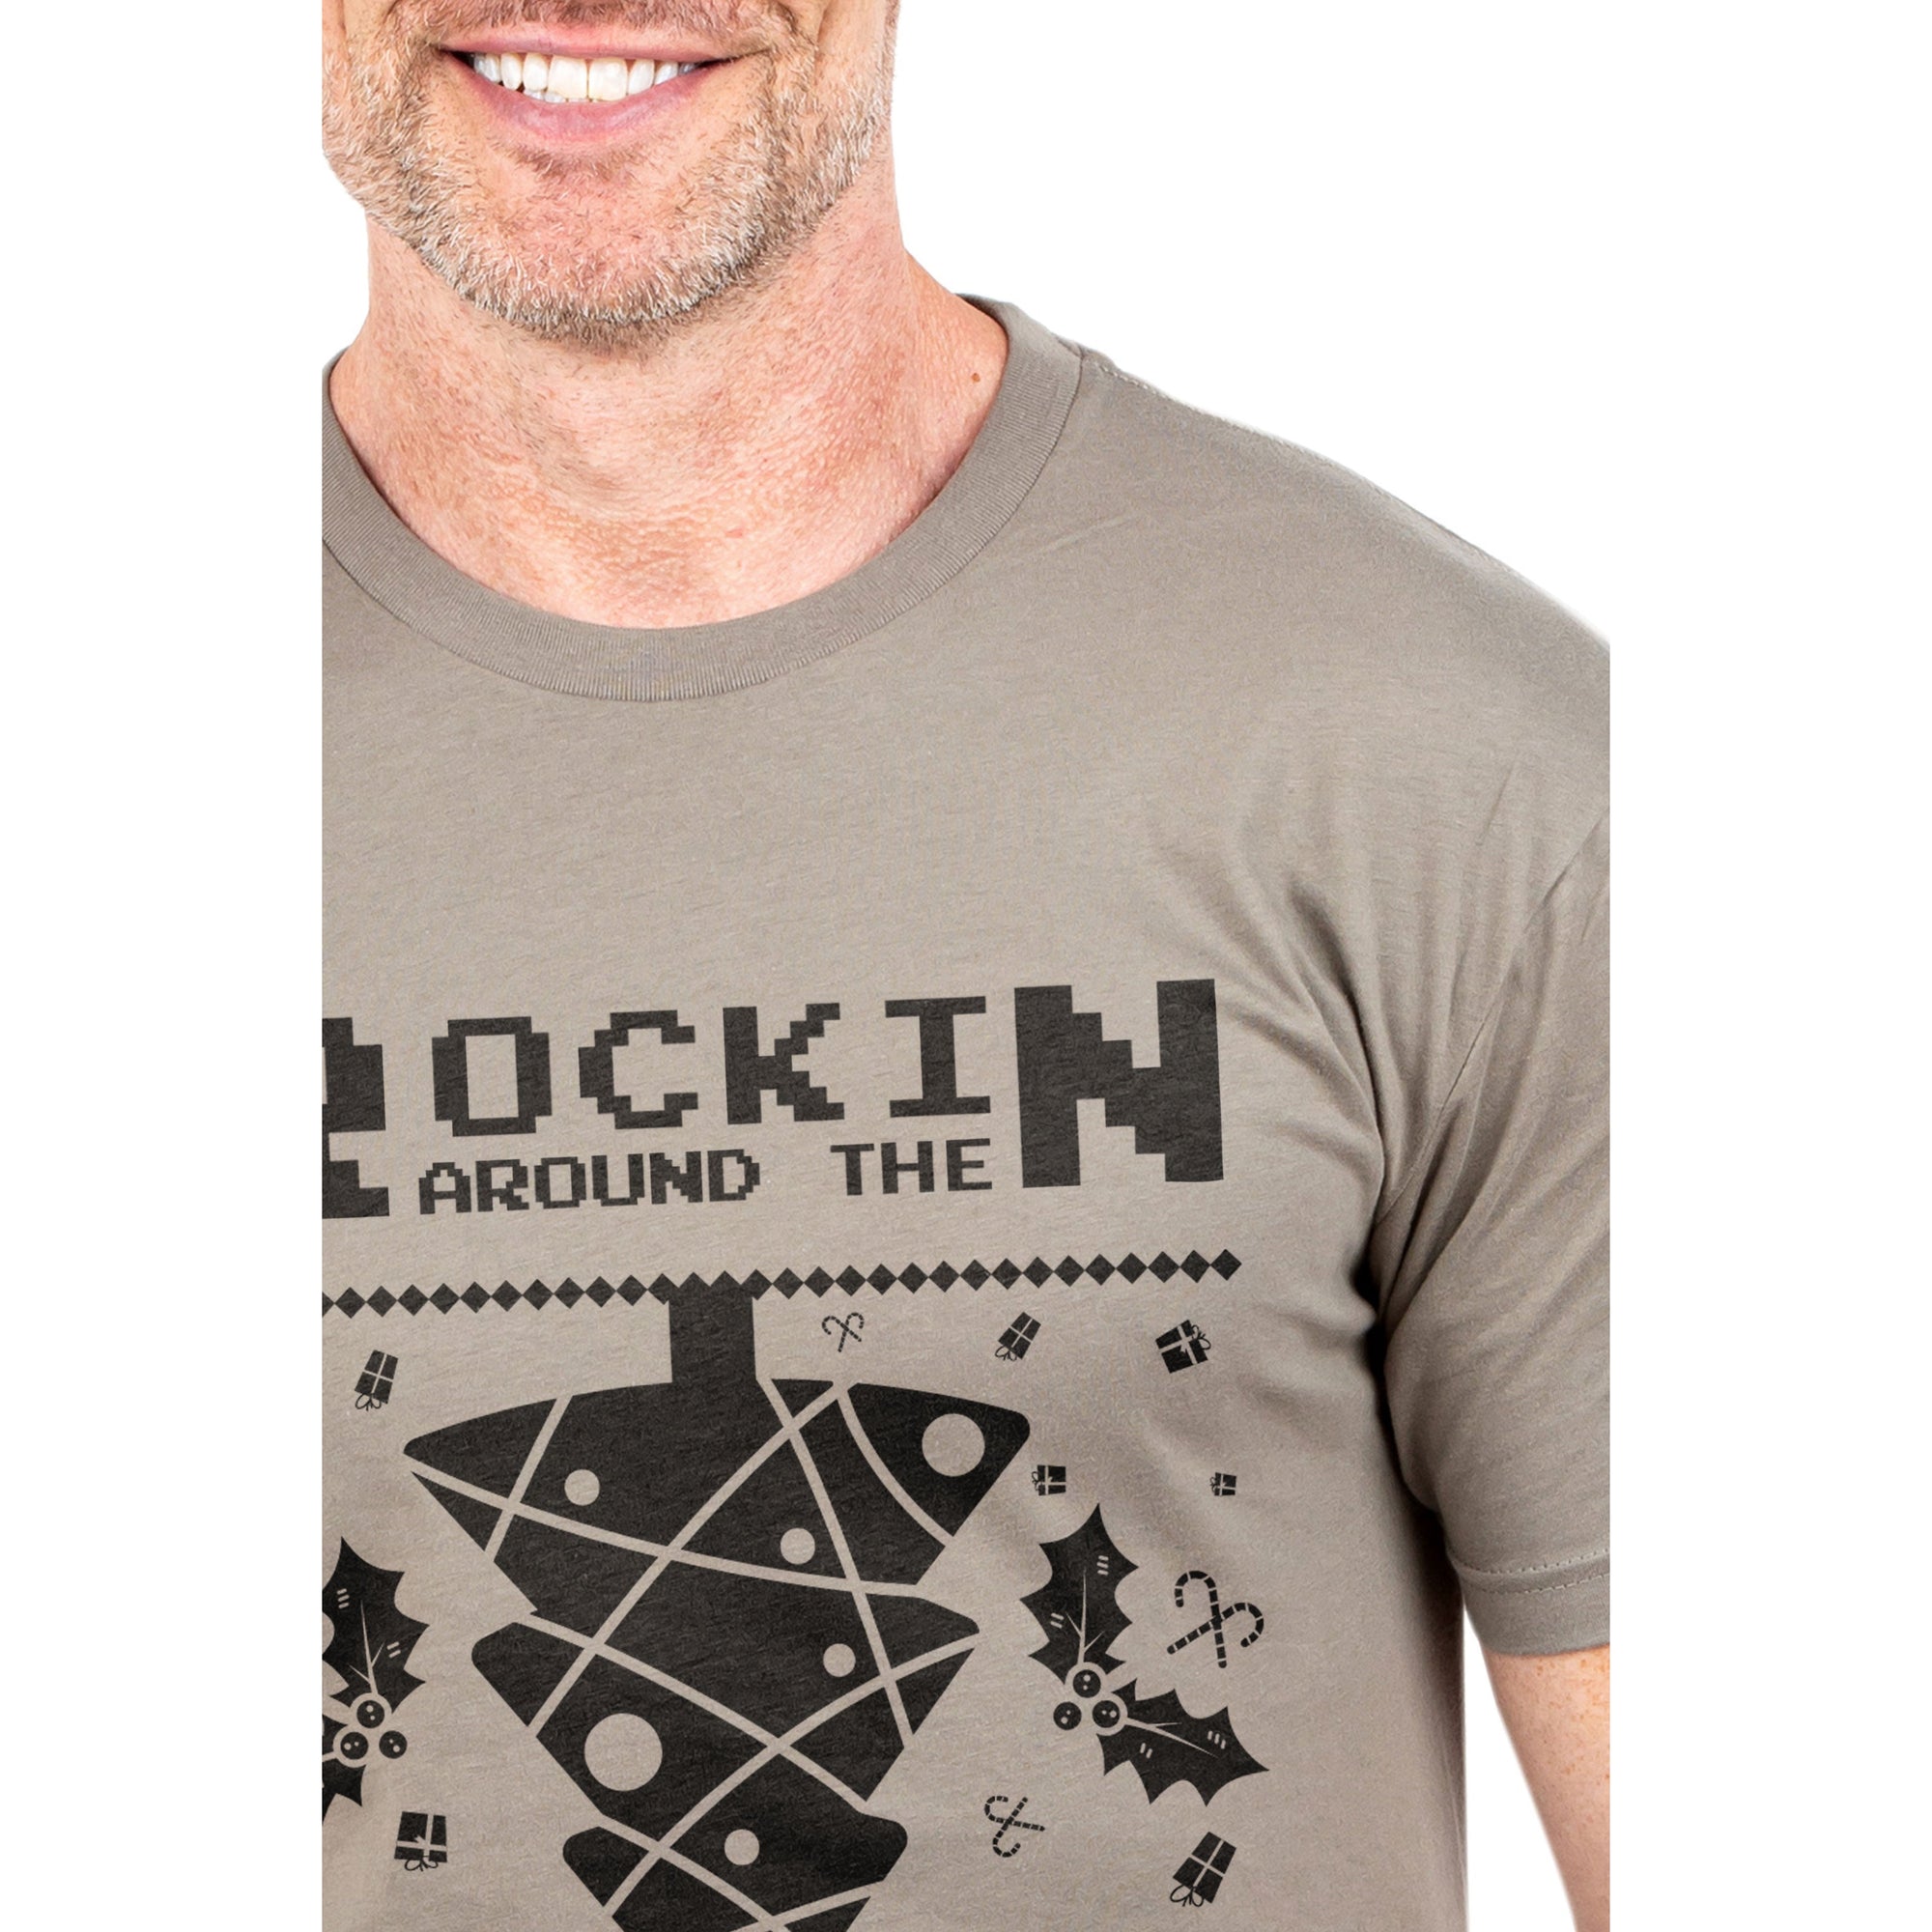 Rockin Around The Upside Down Printed Graphic Men's Crew T-Shirt Heather Tan Closeup Image